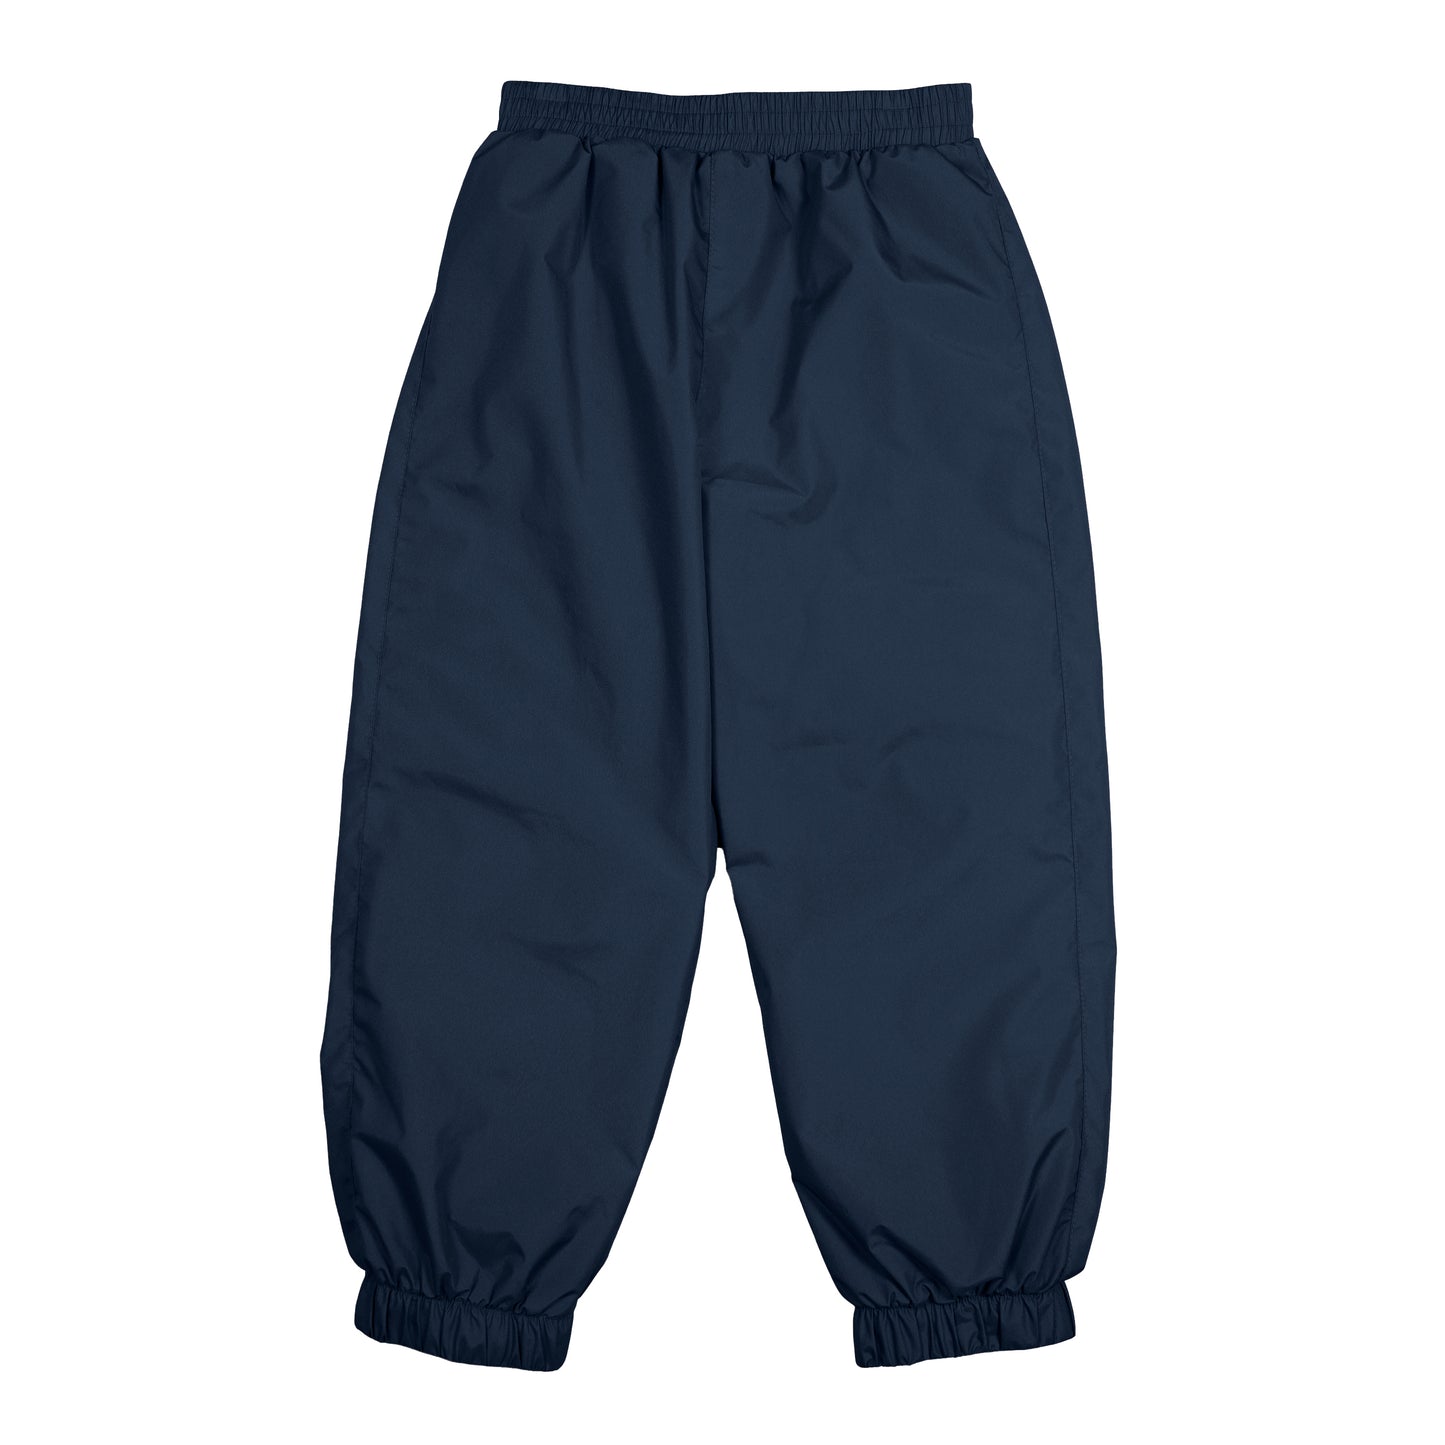 Pantalons mi-saison pour enfants - doublure taffetas Navy